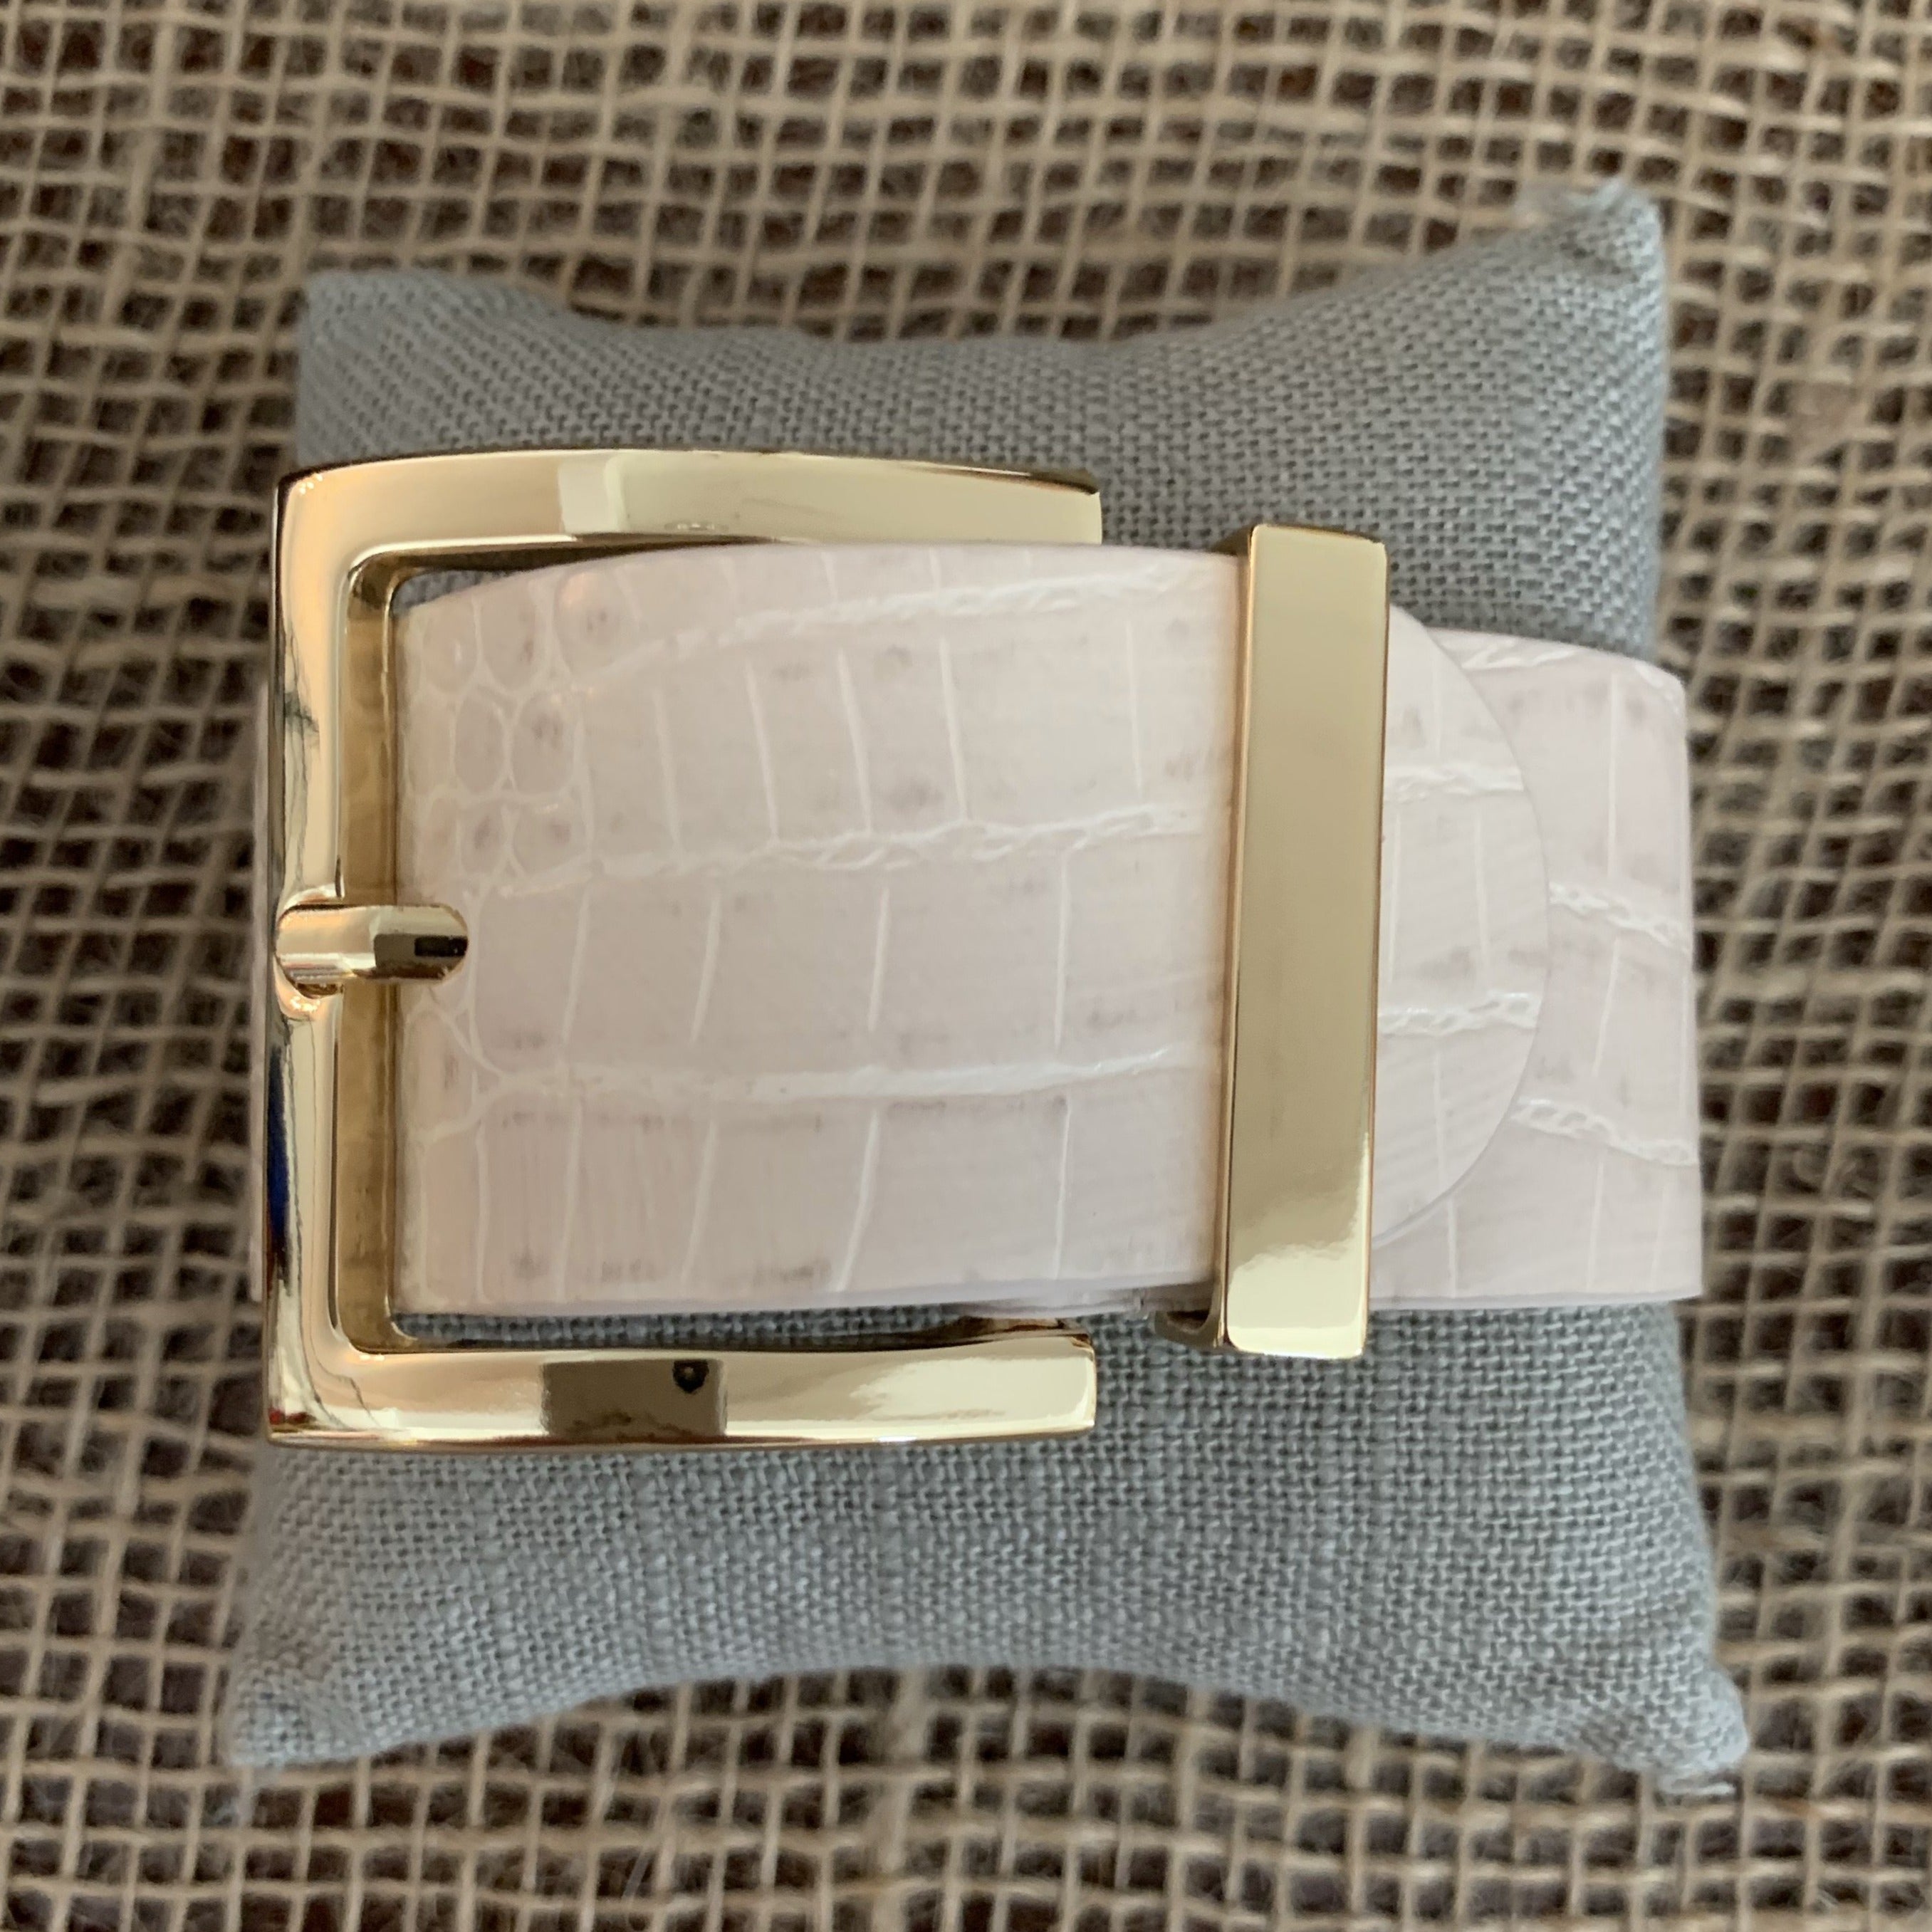 Alligator print cream leather belt bracelet with gold buckle fastener